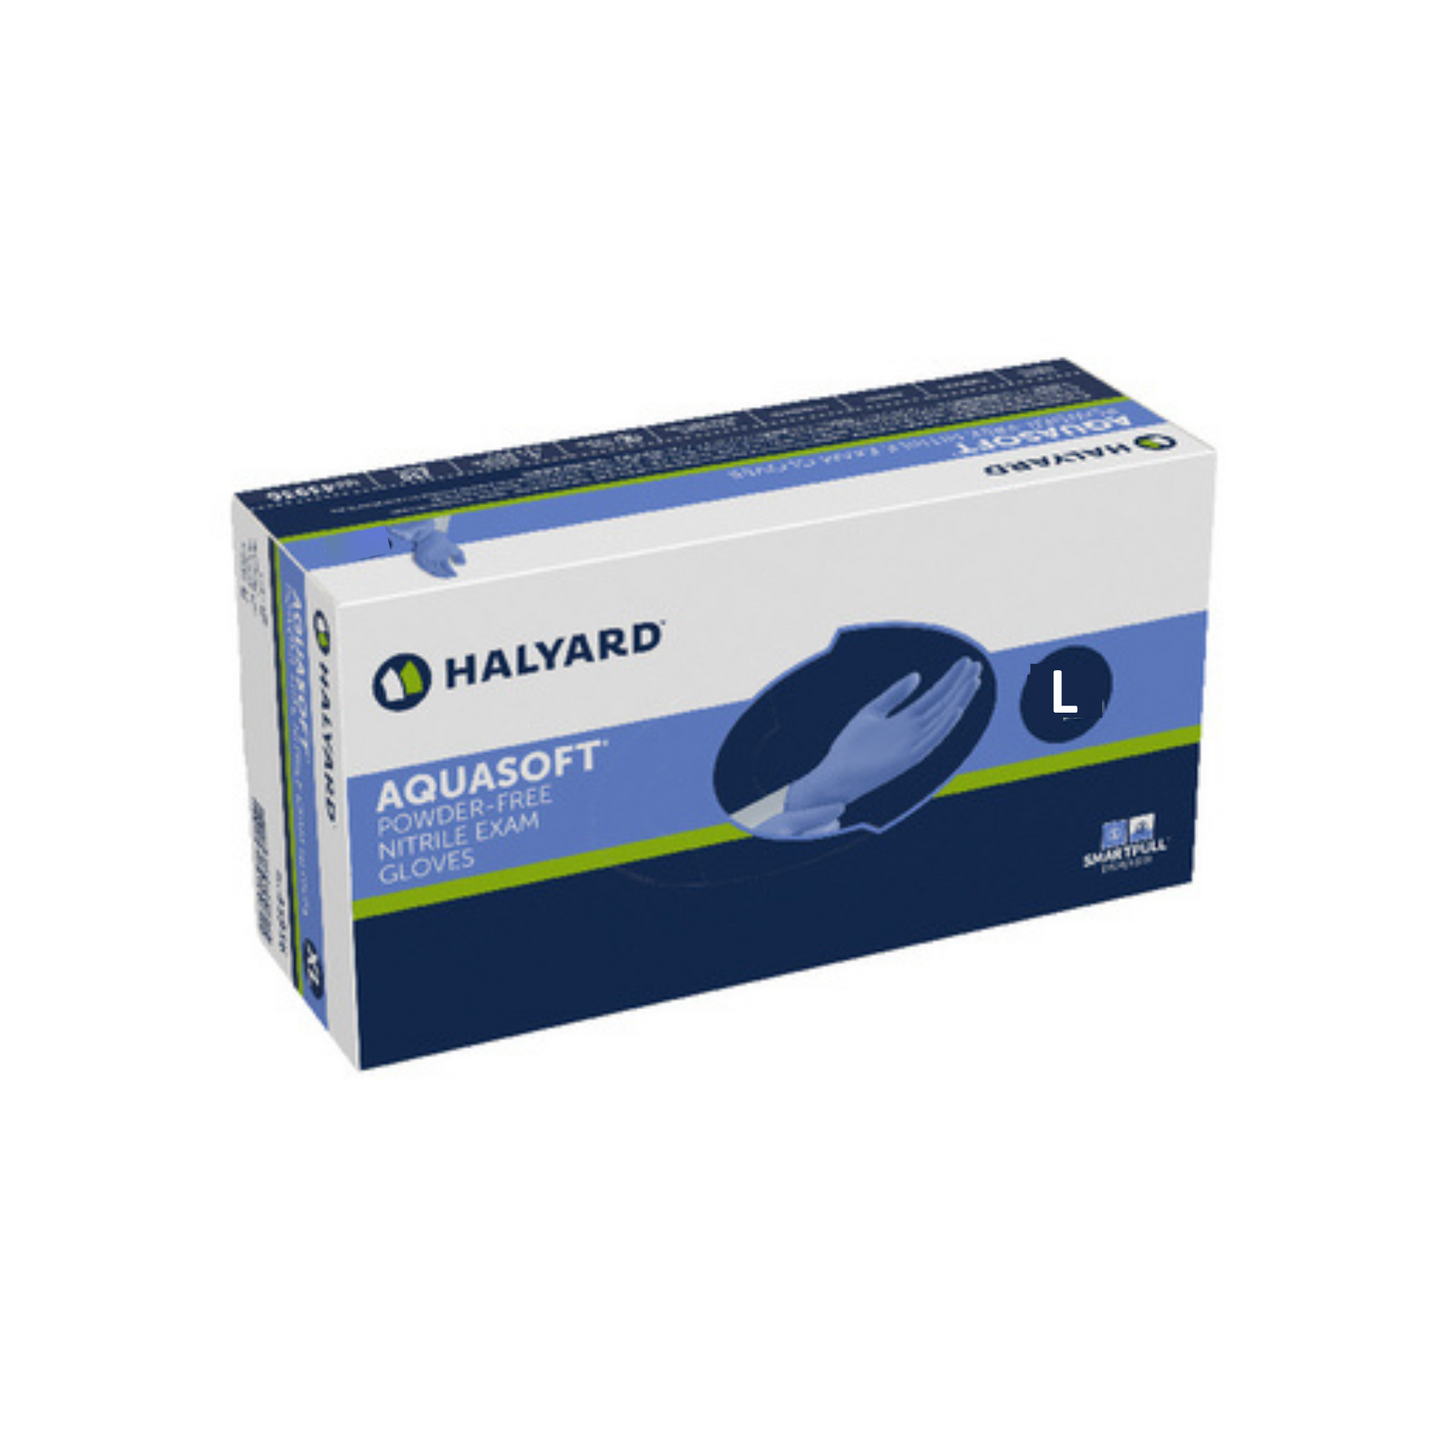 Halyard Aquasoft Nitrile Exam Gloves L - Box (300pc)